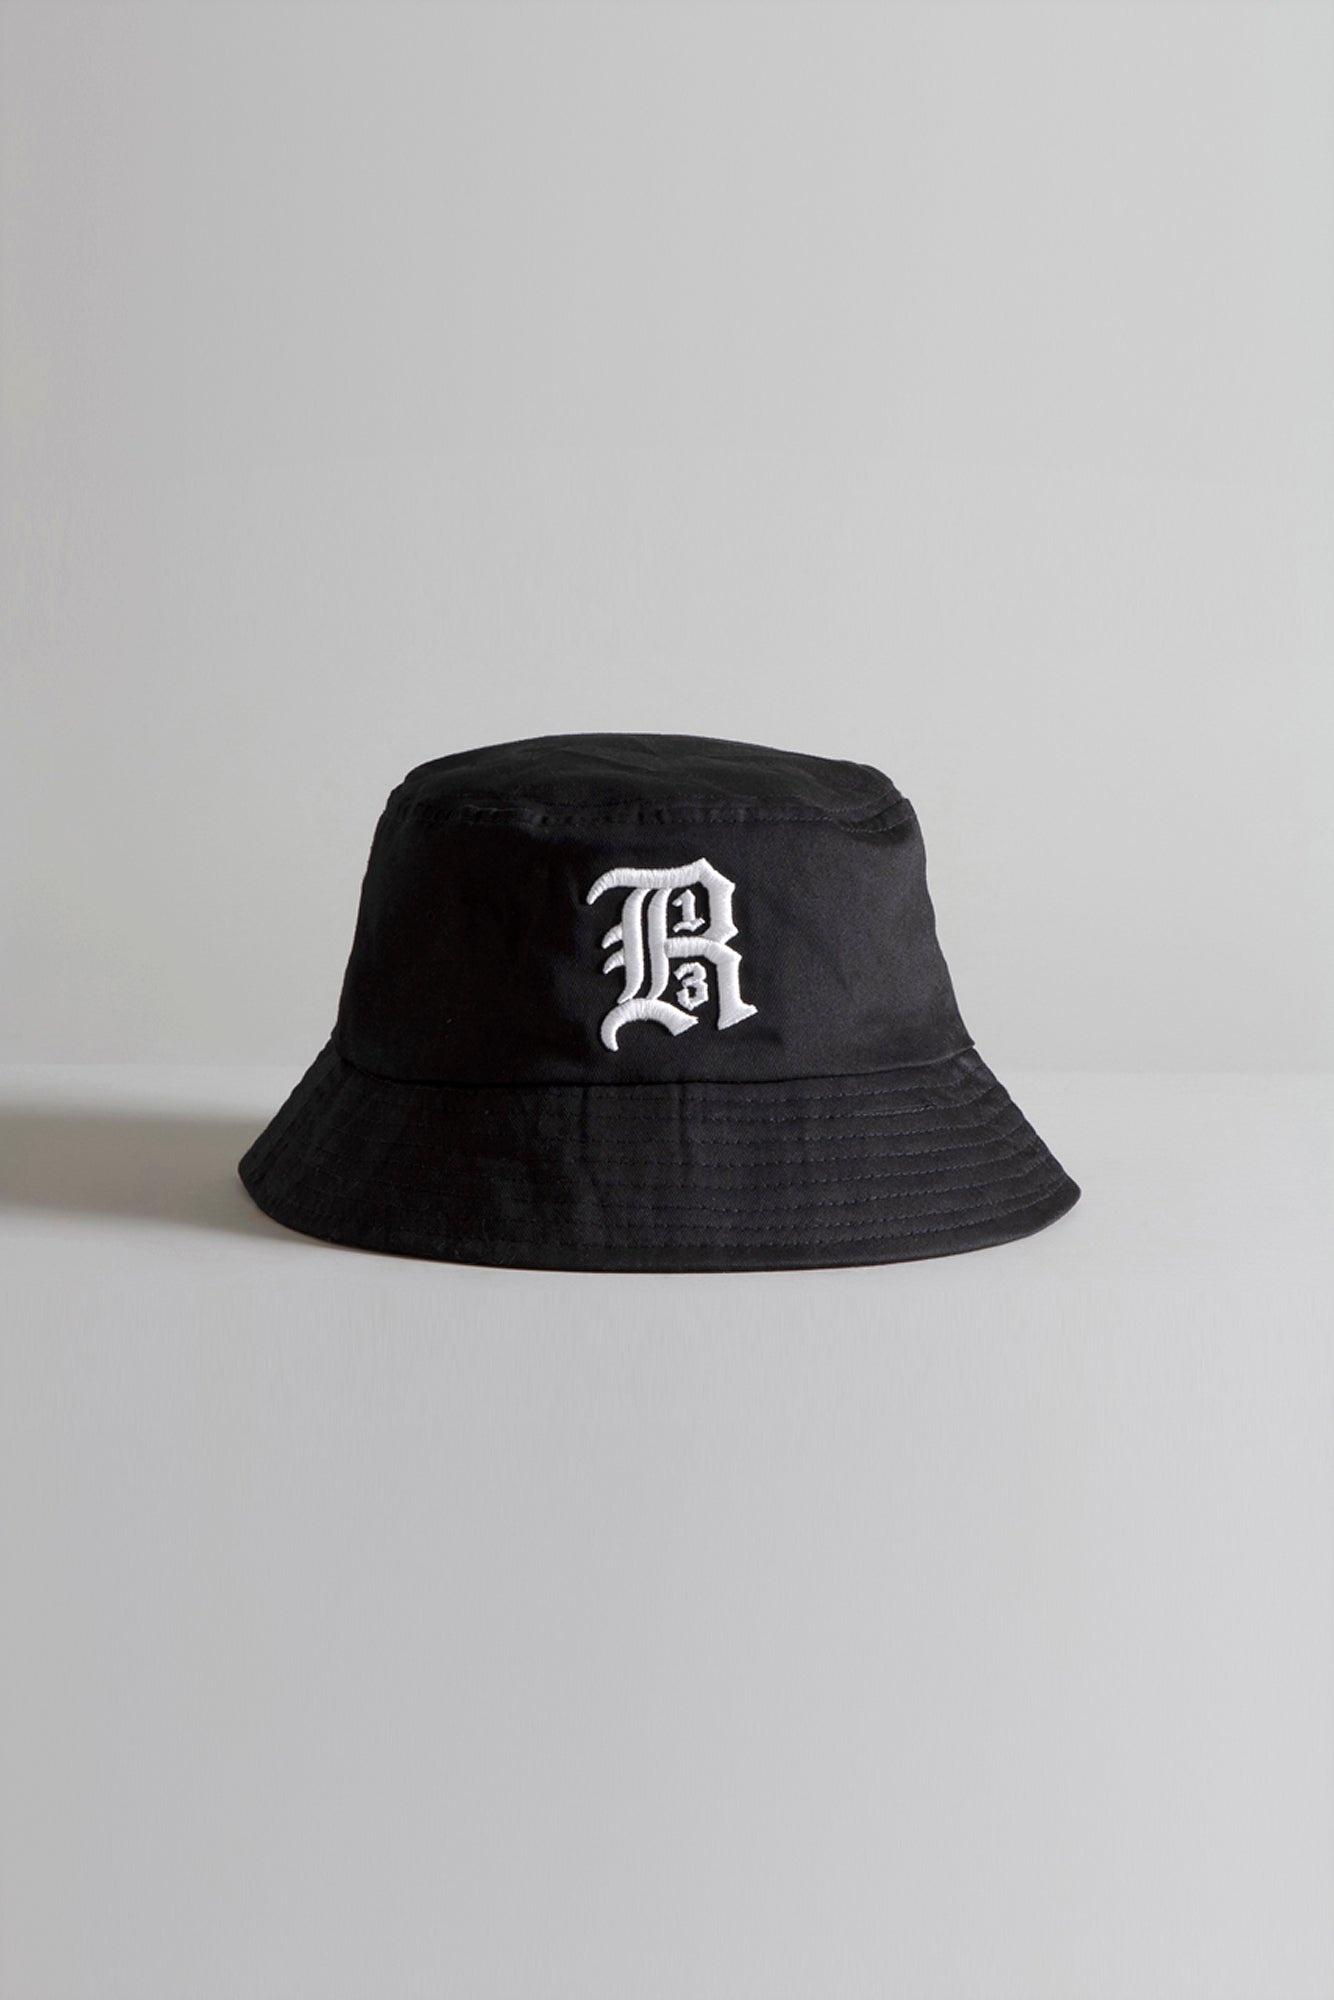 R13 BUCKET HAT | R13 Denim Official Site - 2